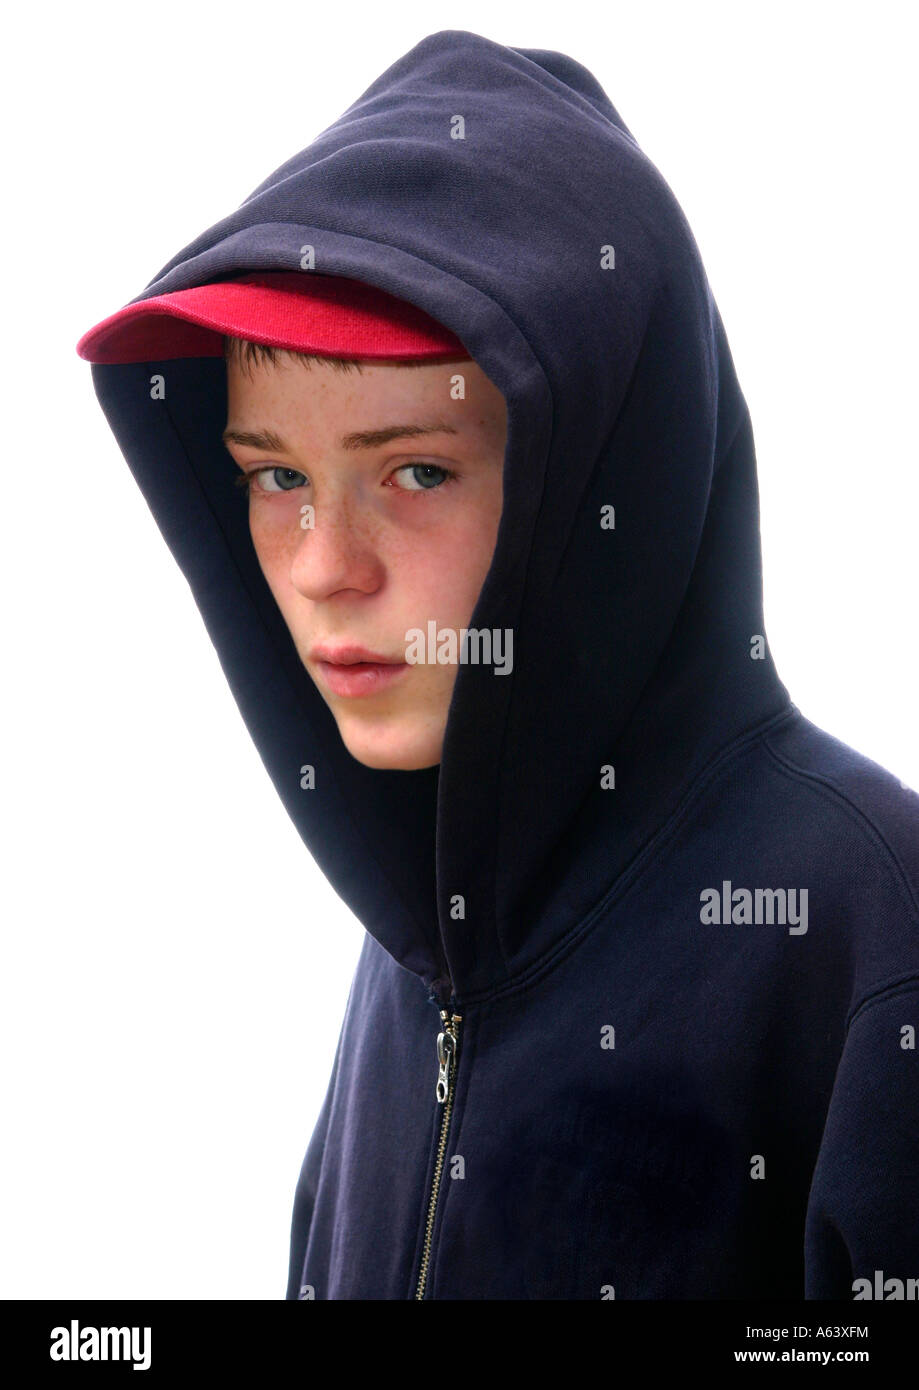 teenage-boy-wearing-baseball-cap-and-hoodie-A63XFM.jpg